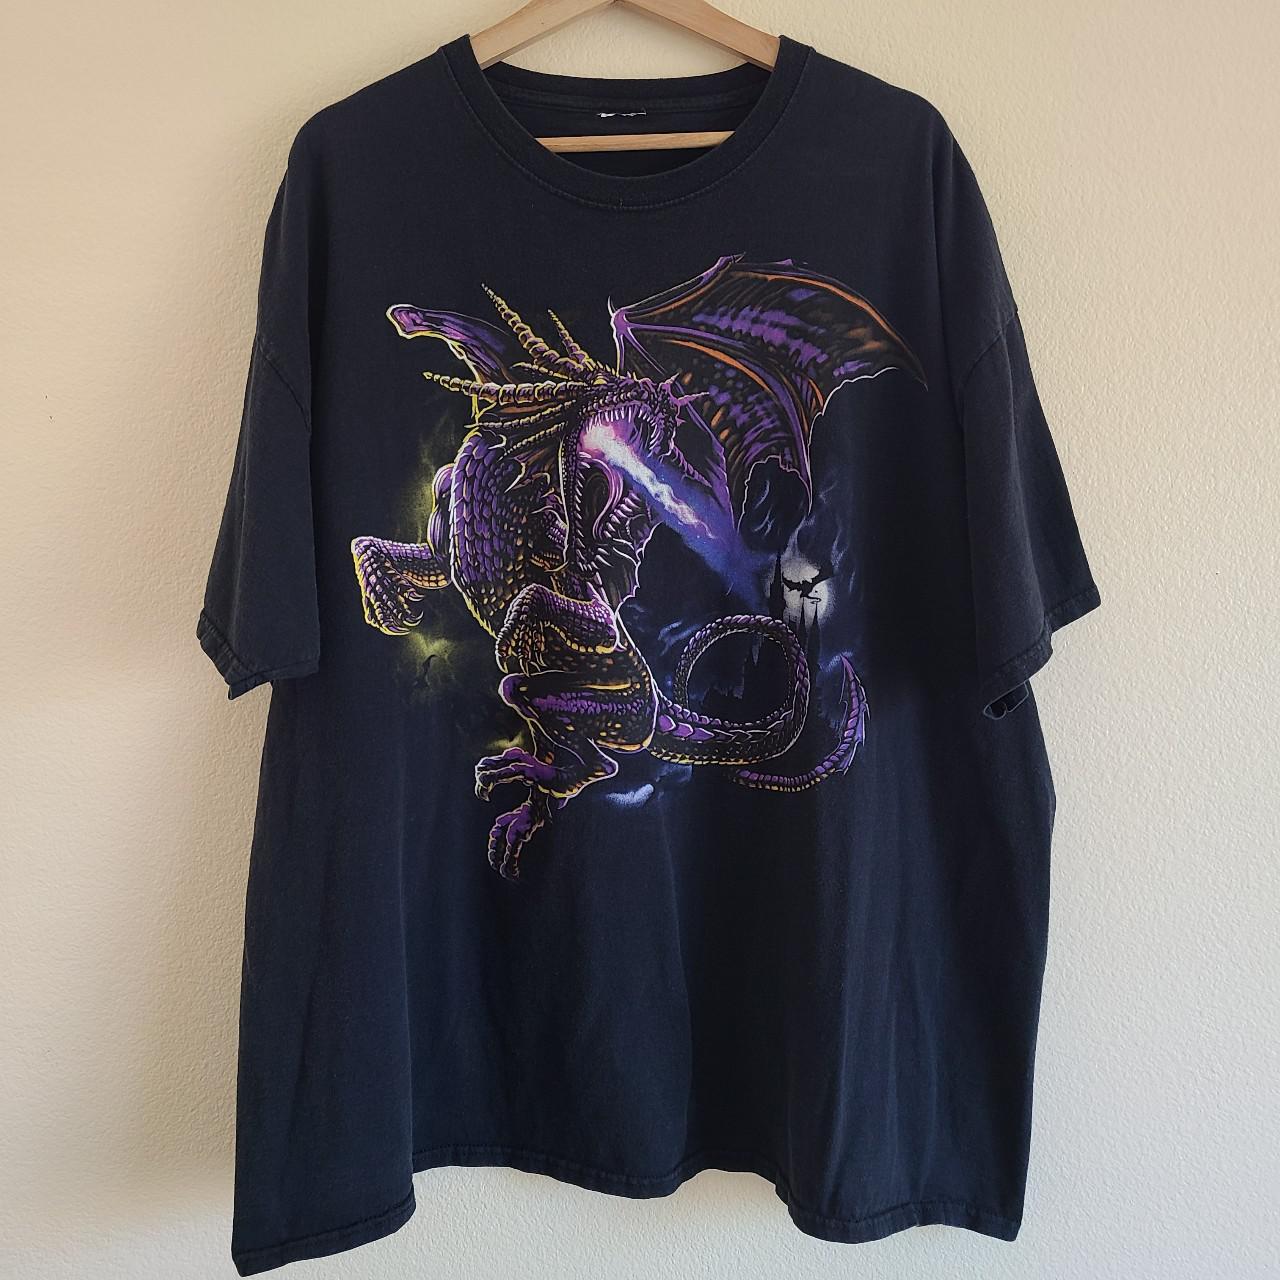 Product Image 1 - Faded black dragon t-shirt XL